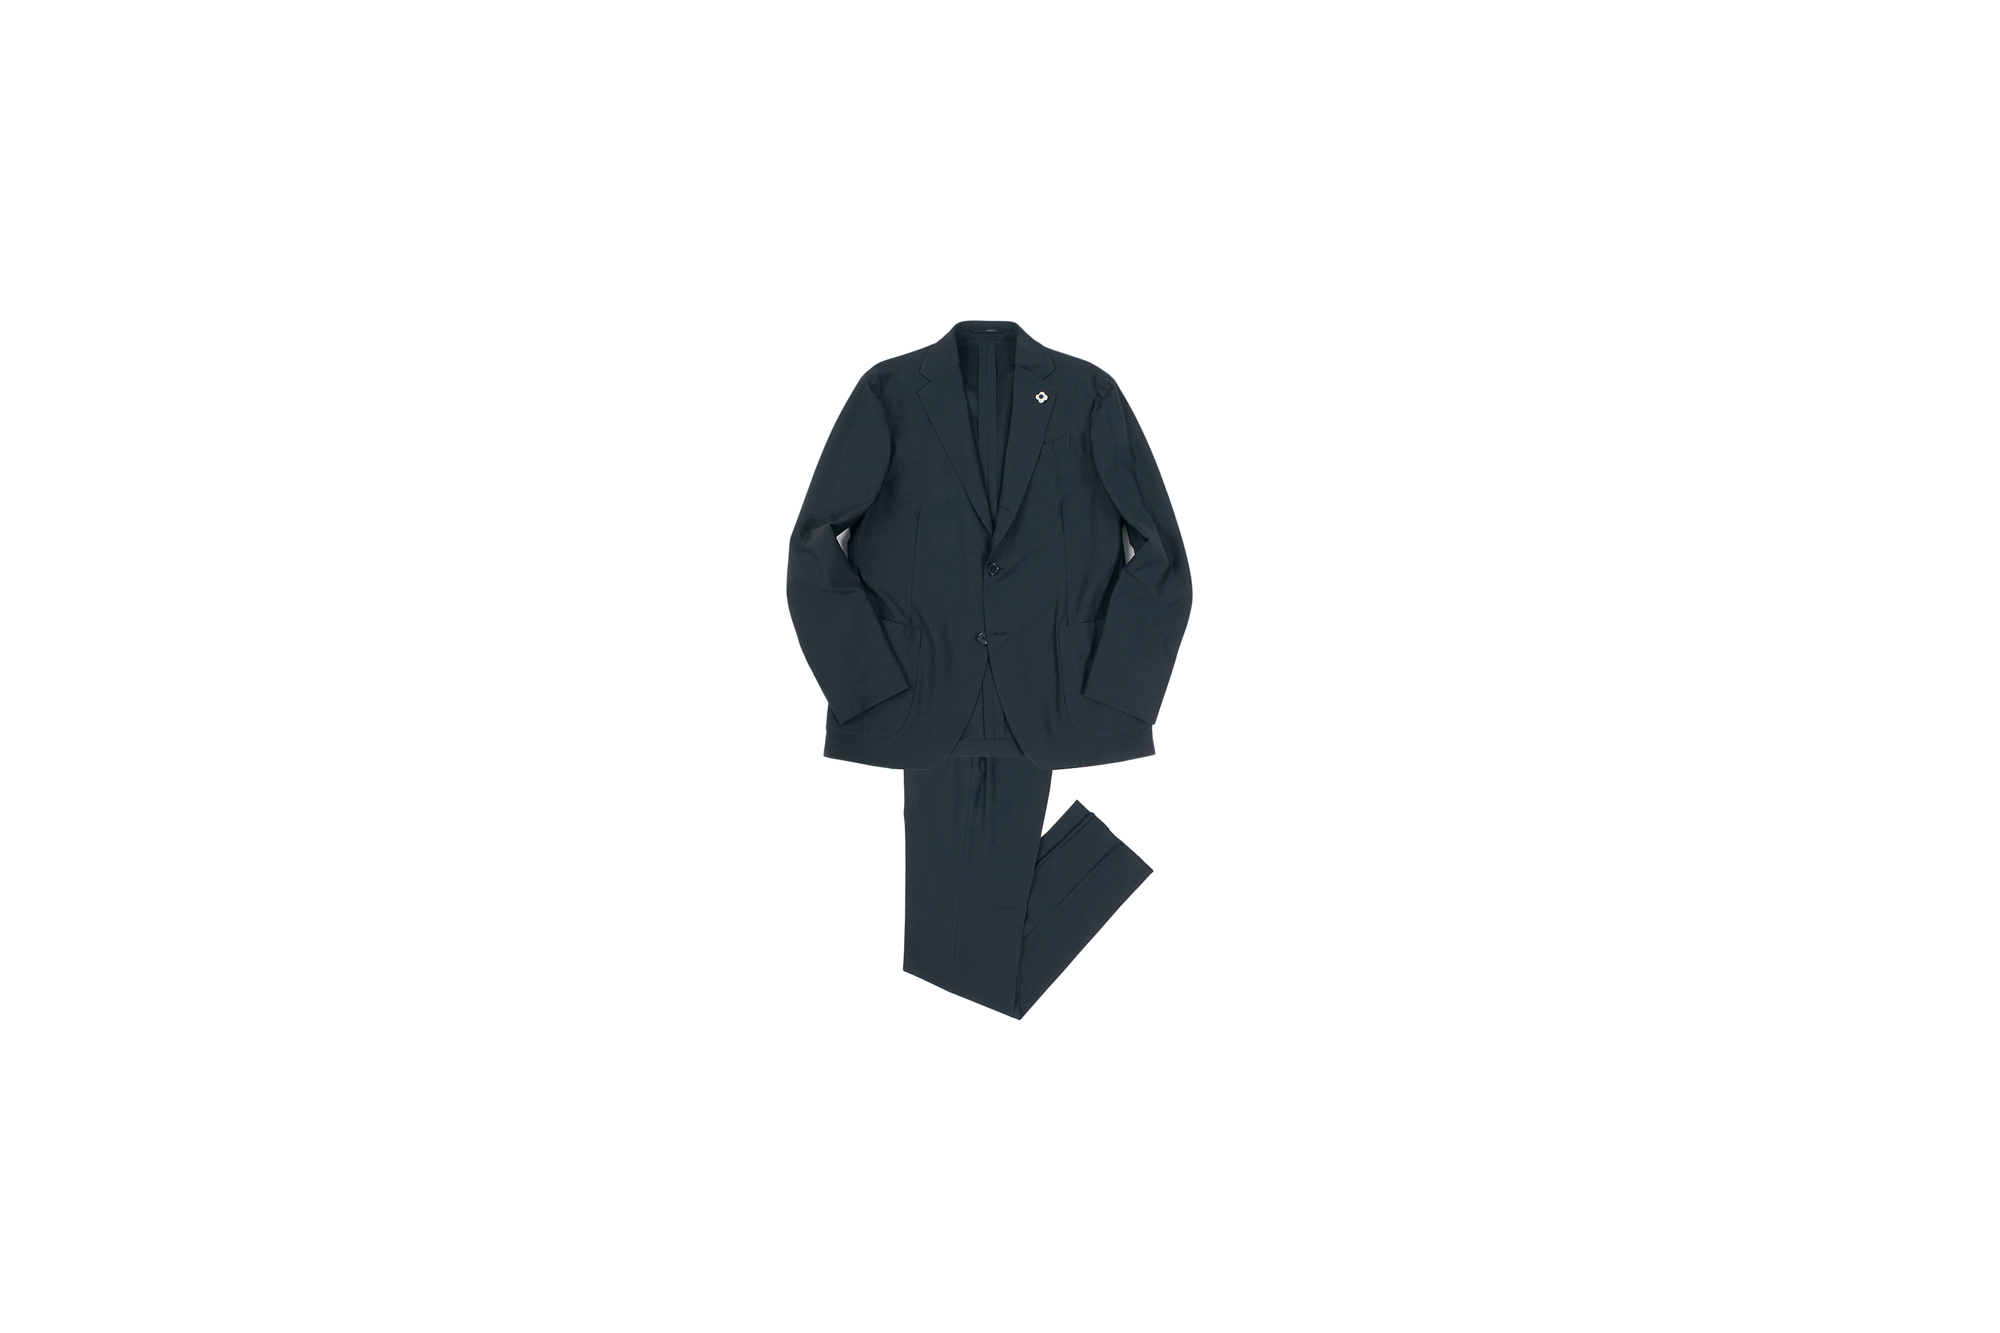 LARDINI (ラルディーニ) EASY WEAR (イージーウエア) Pakkaburu Suit パッカブル サマージャージ スーツ NAVY (ネイビー・1) Made in italy (イタリア製) 2020 春夏新作 愛知 名古屋 altoediritto アルトエデリッ